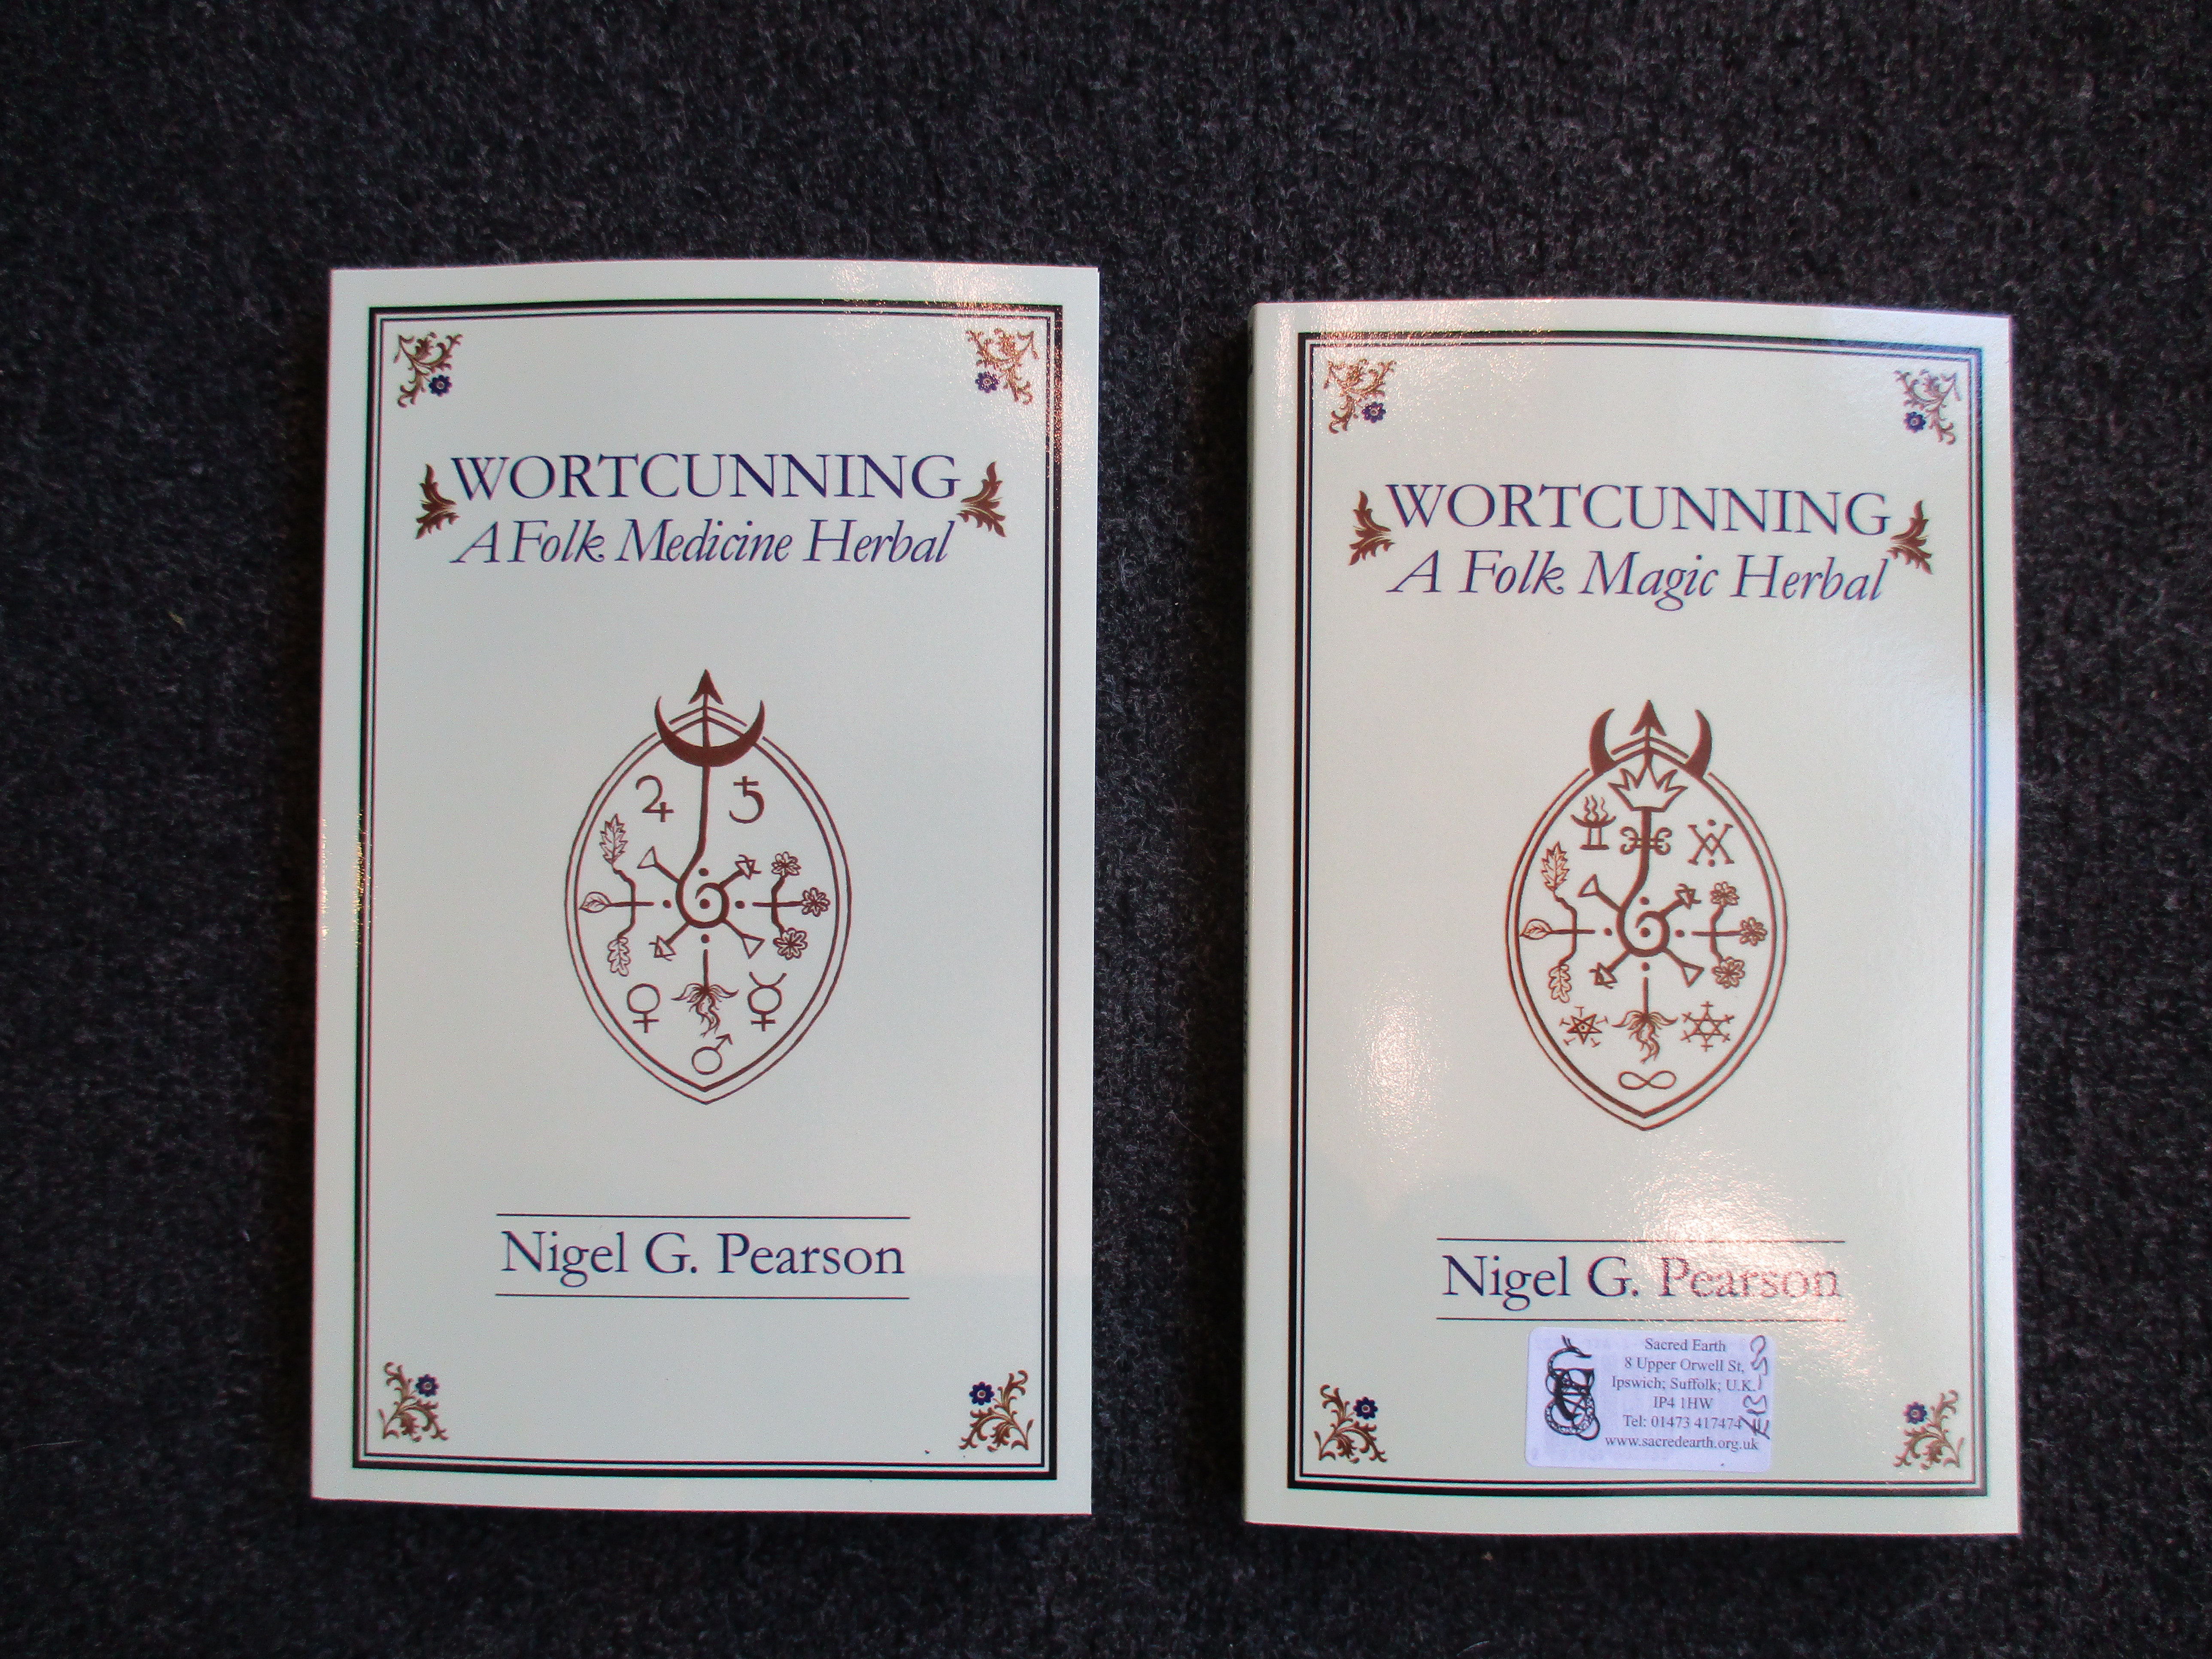 WortCunning: A Folk Medicine/Magical Herbal. By Nigel G. Pearson. Paperback Edition.